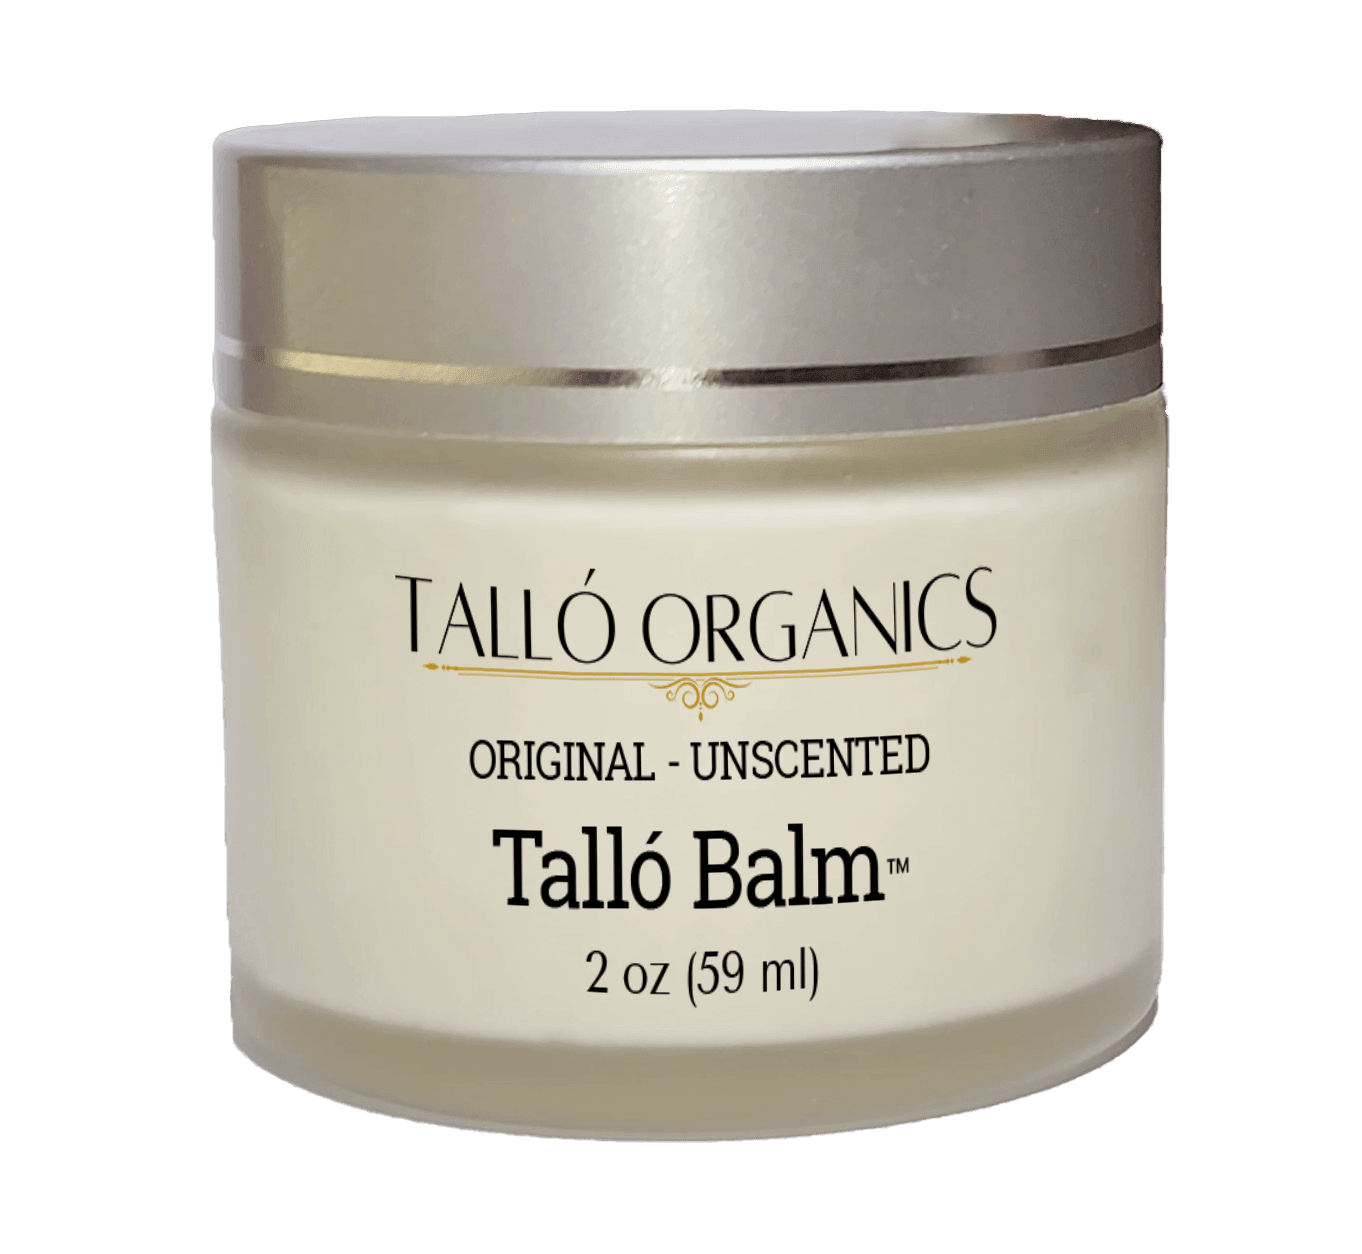 A jar of Tallo Balm